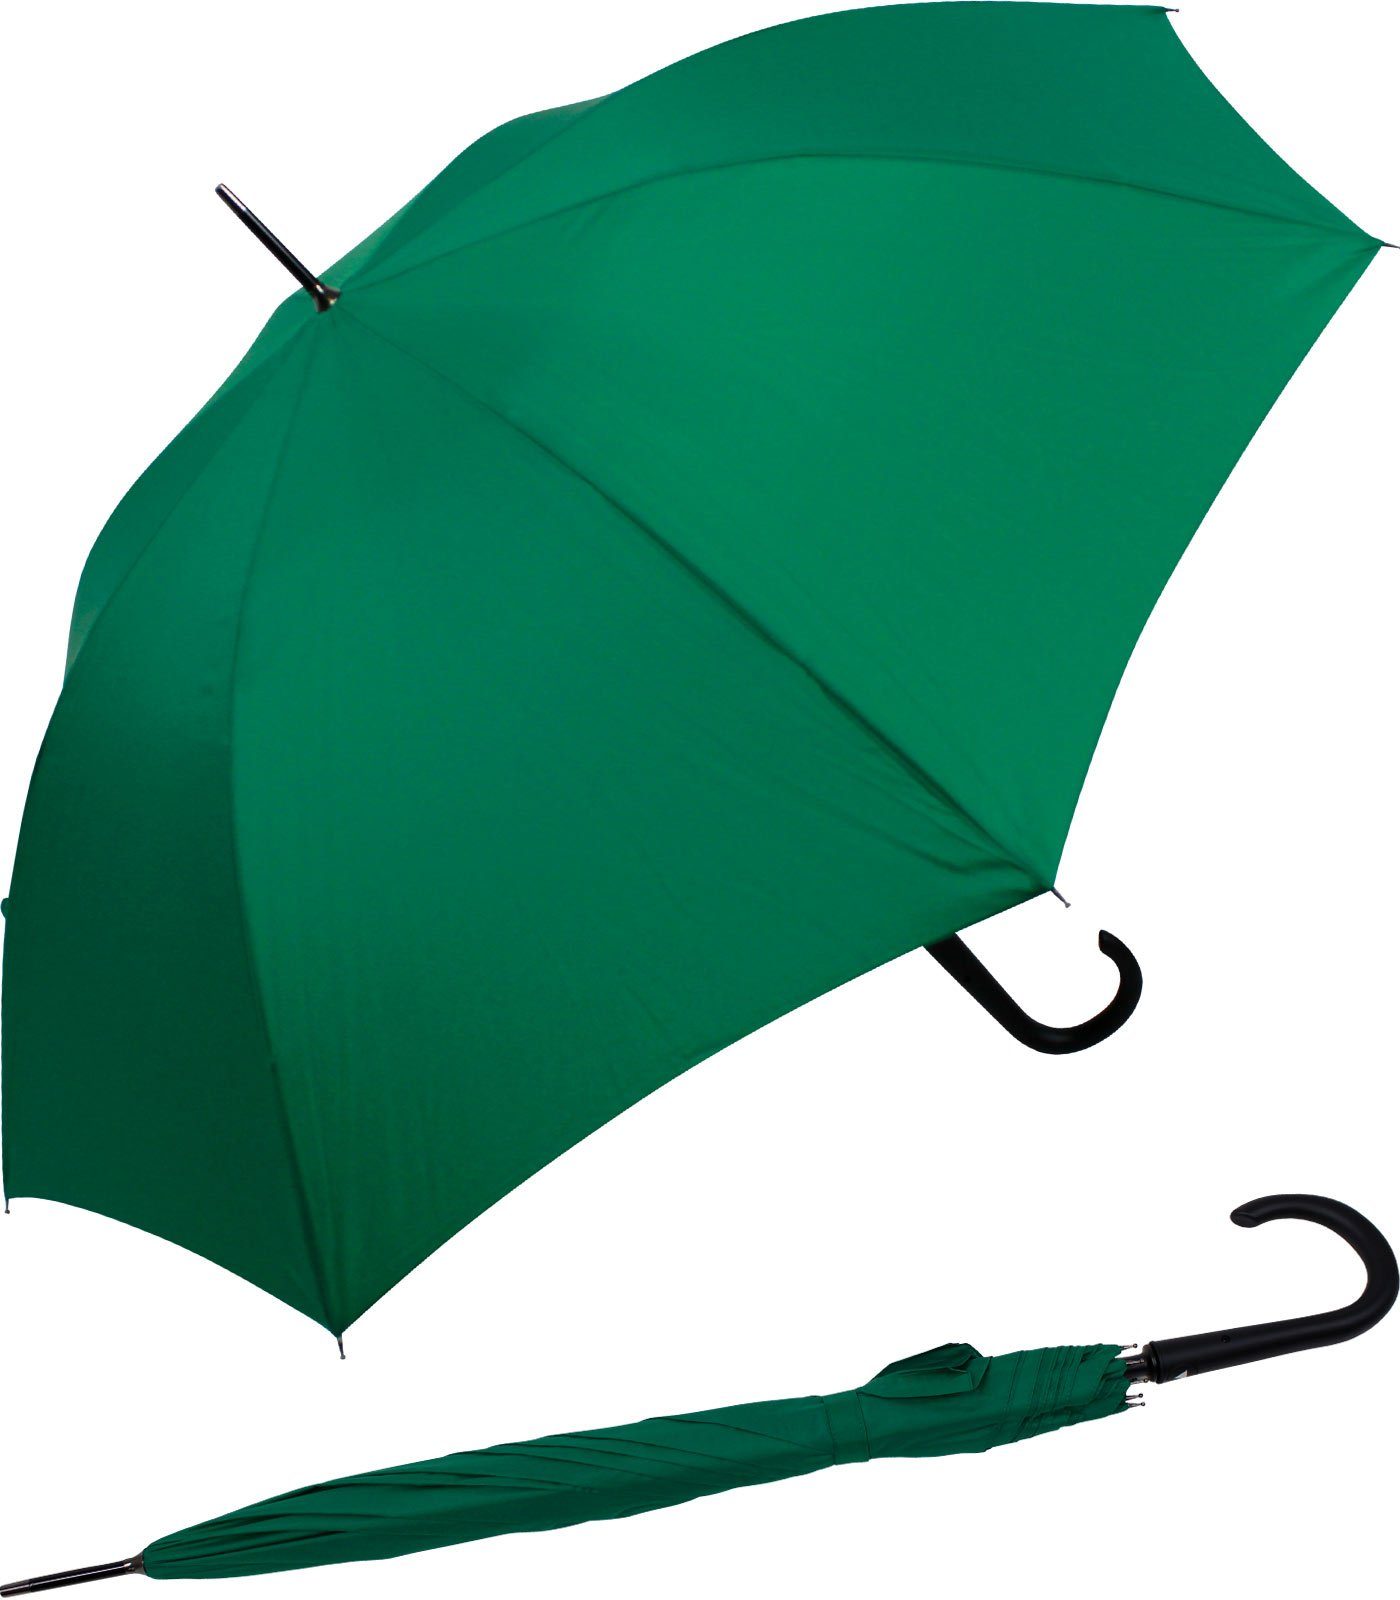 RS-Versand Langregenschirm großer stabiler Regenschirm mit Auf-Automatik, Stahl-Fiberglas-Gestell, integrierter Auslöseknopf grün | Stockschirme